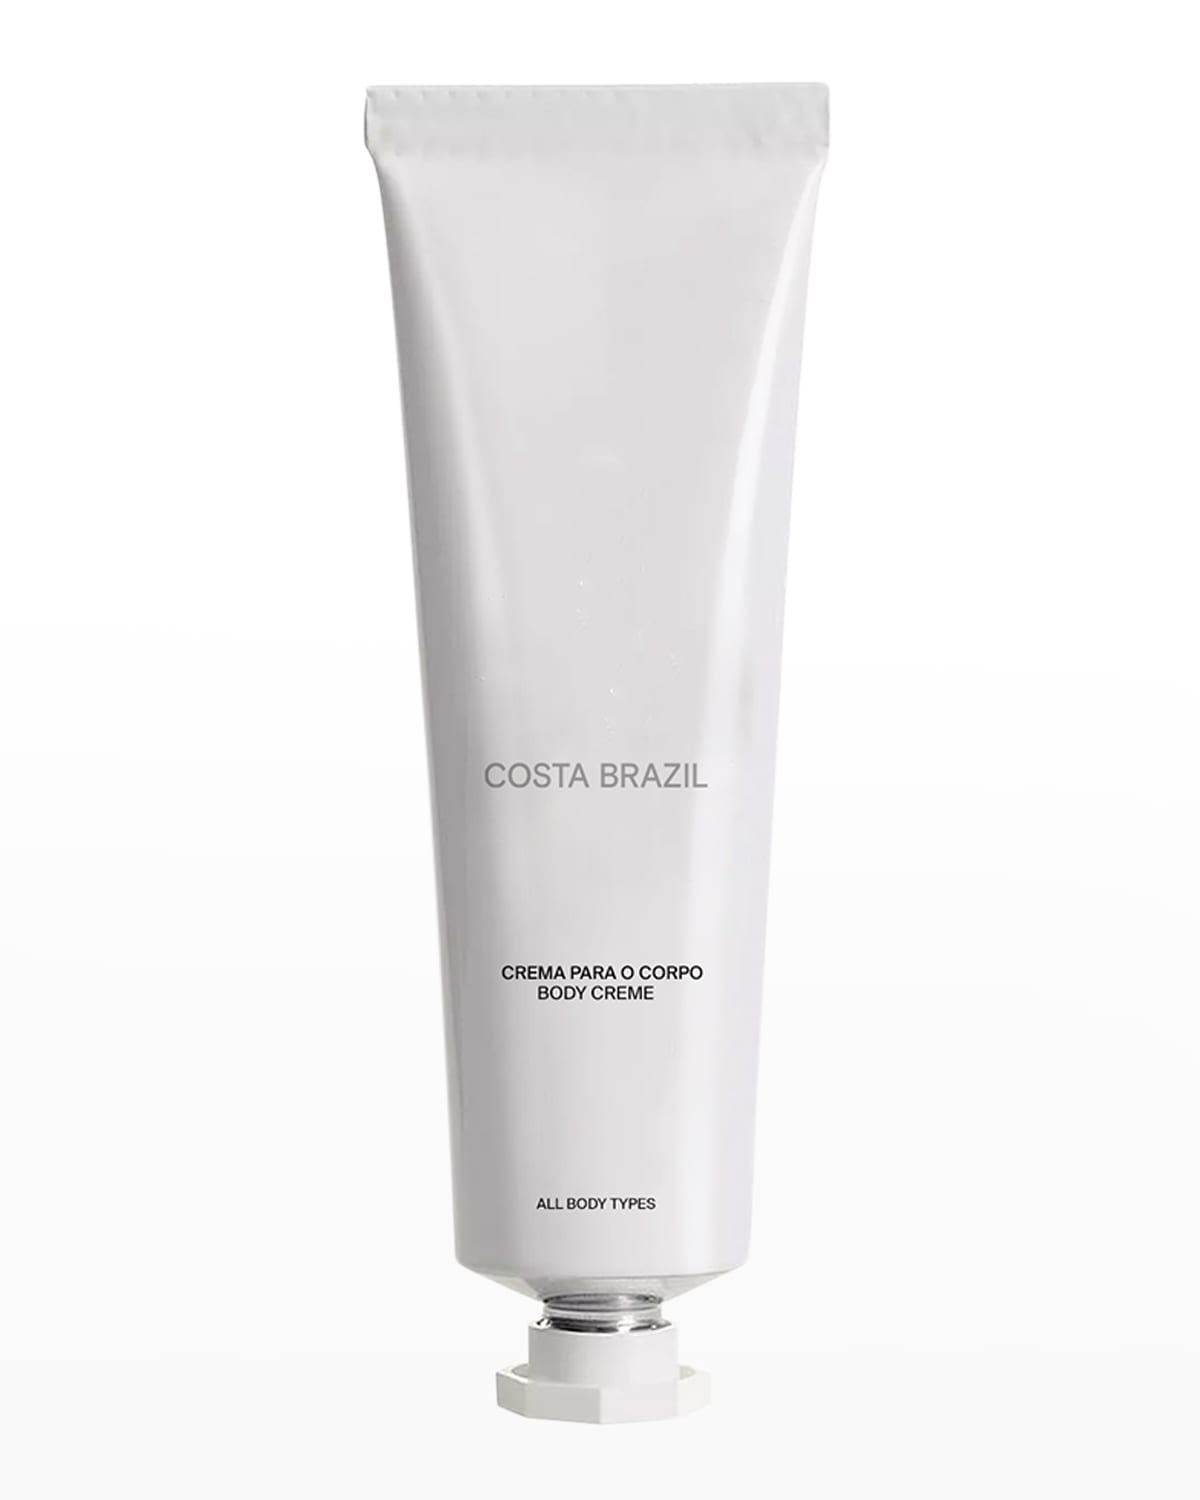 Costa Brazil Creme Para o Corpo Body Cream, Yours with any $200 Costa Brazil Purchase